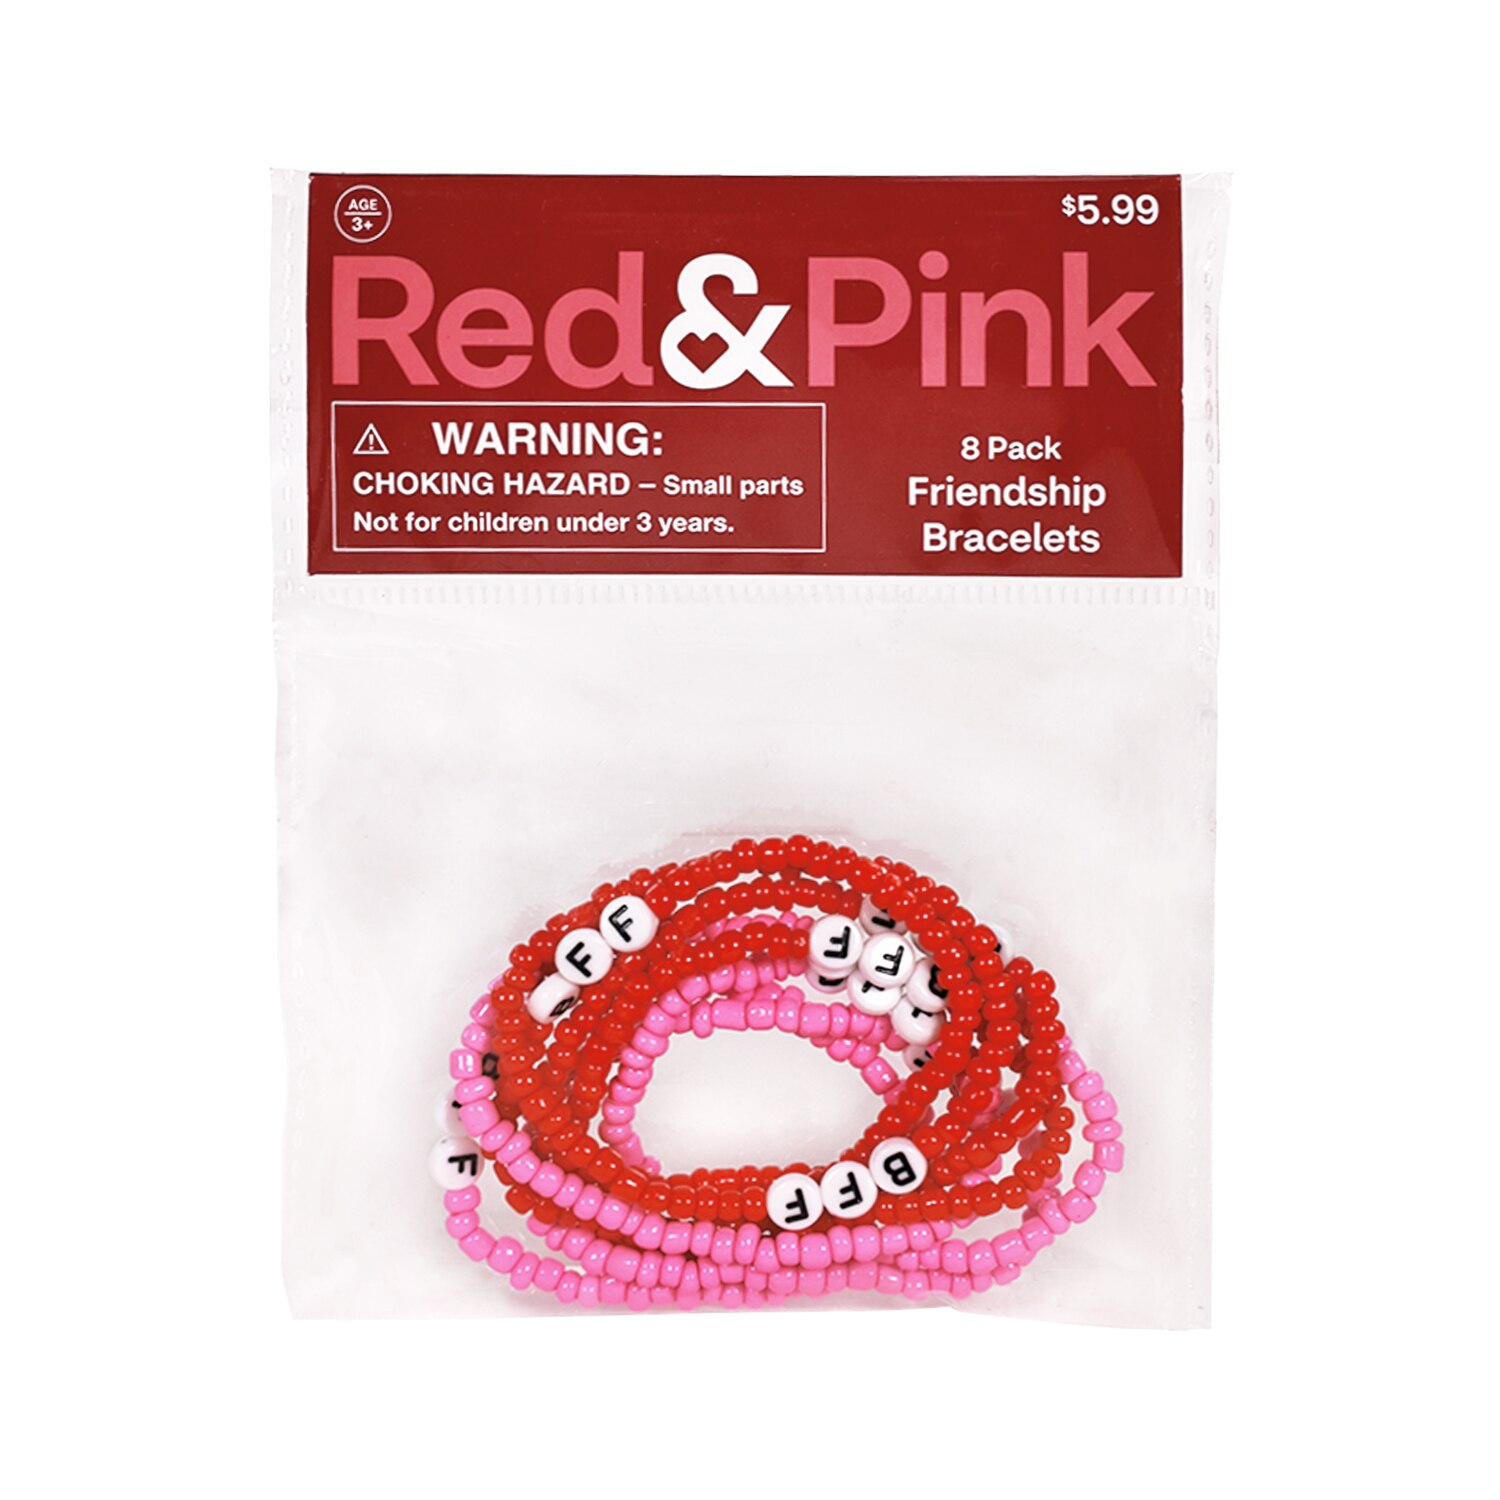 Red & Pink Friendship Bracelets, 8pk - 8 Ct , CVS